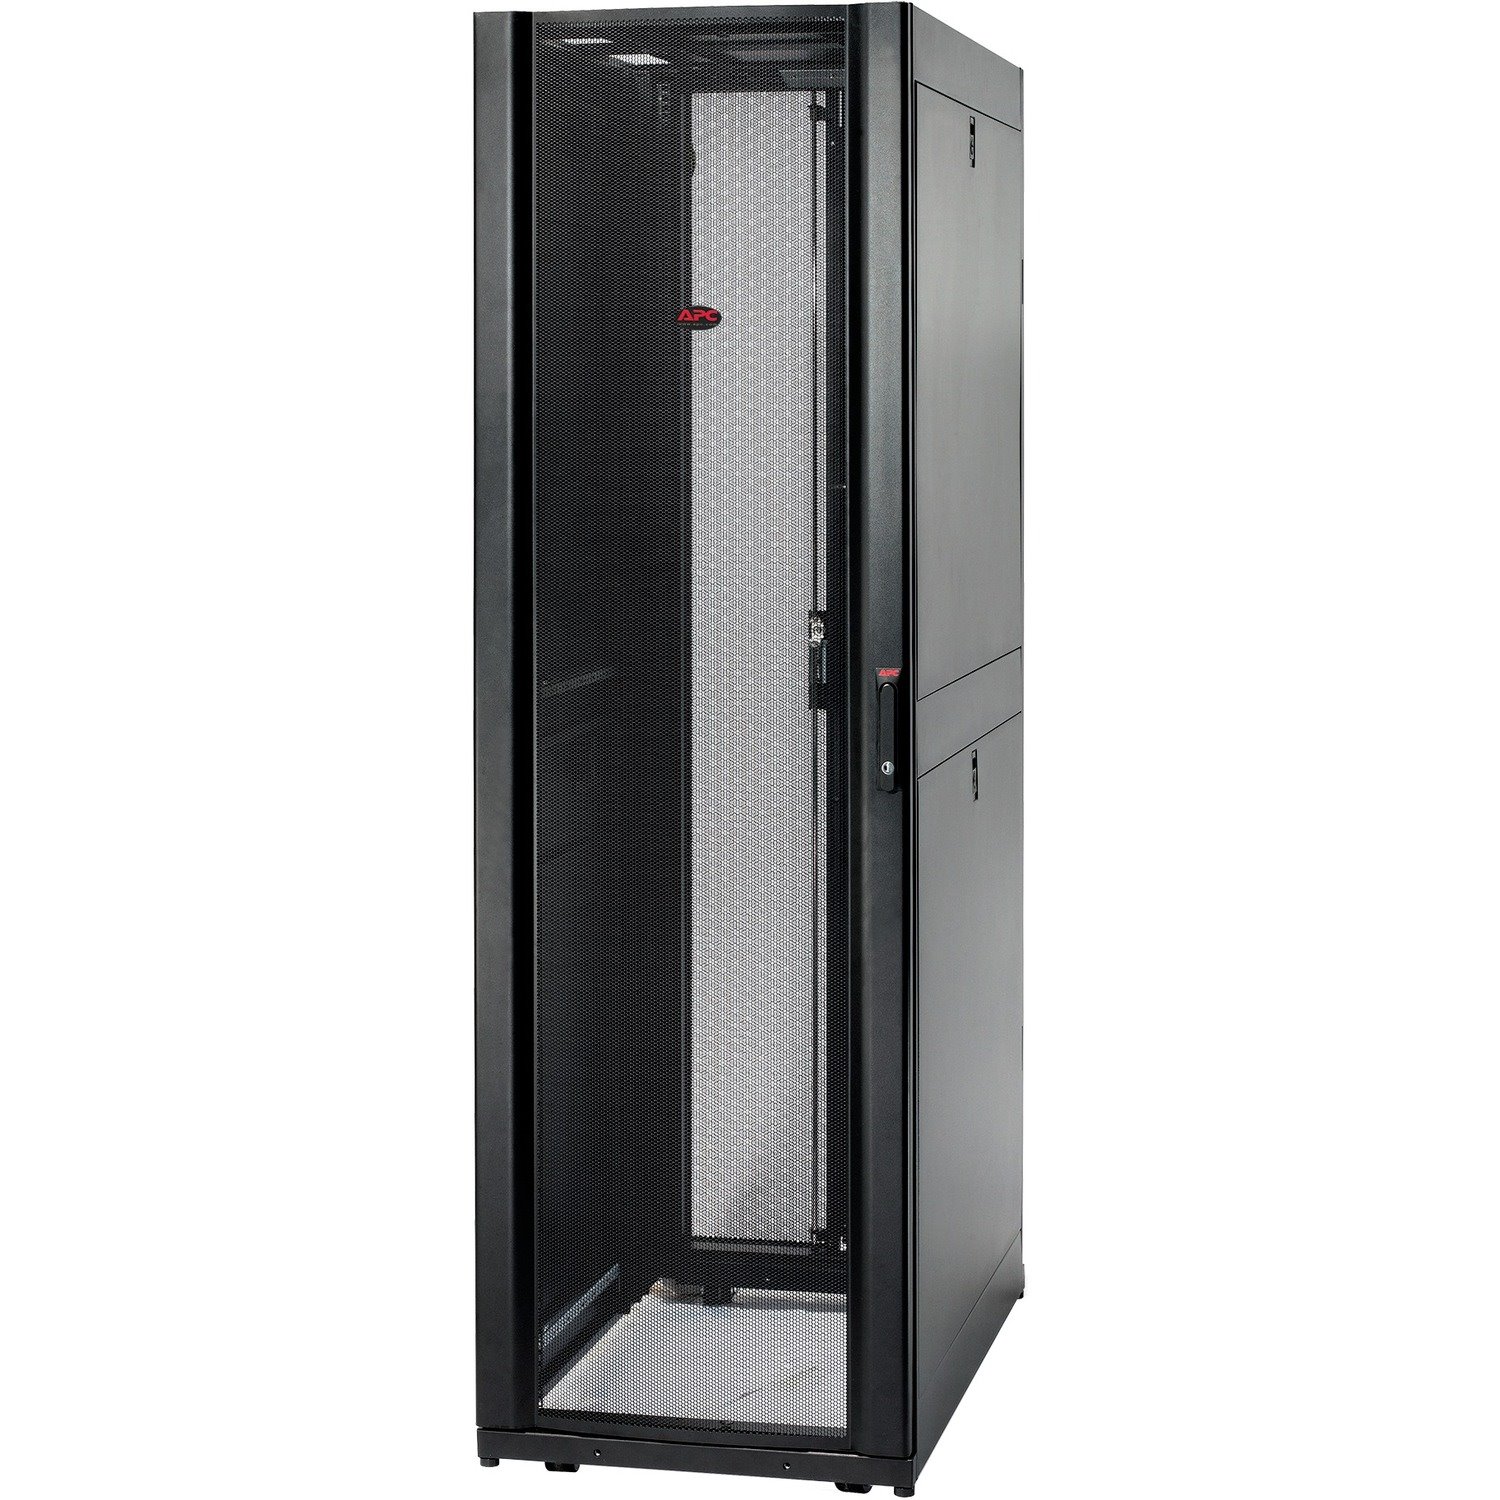 APC by Schneider Electric NetShelter 42U Rack Cabinet for Storage, Server - 482.60 mm Rack Width - Black